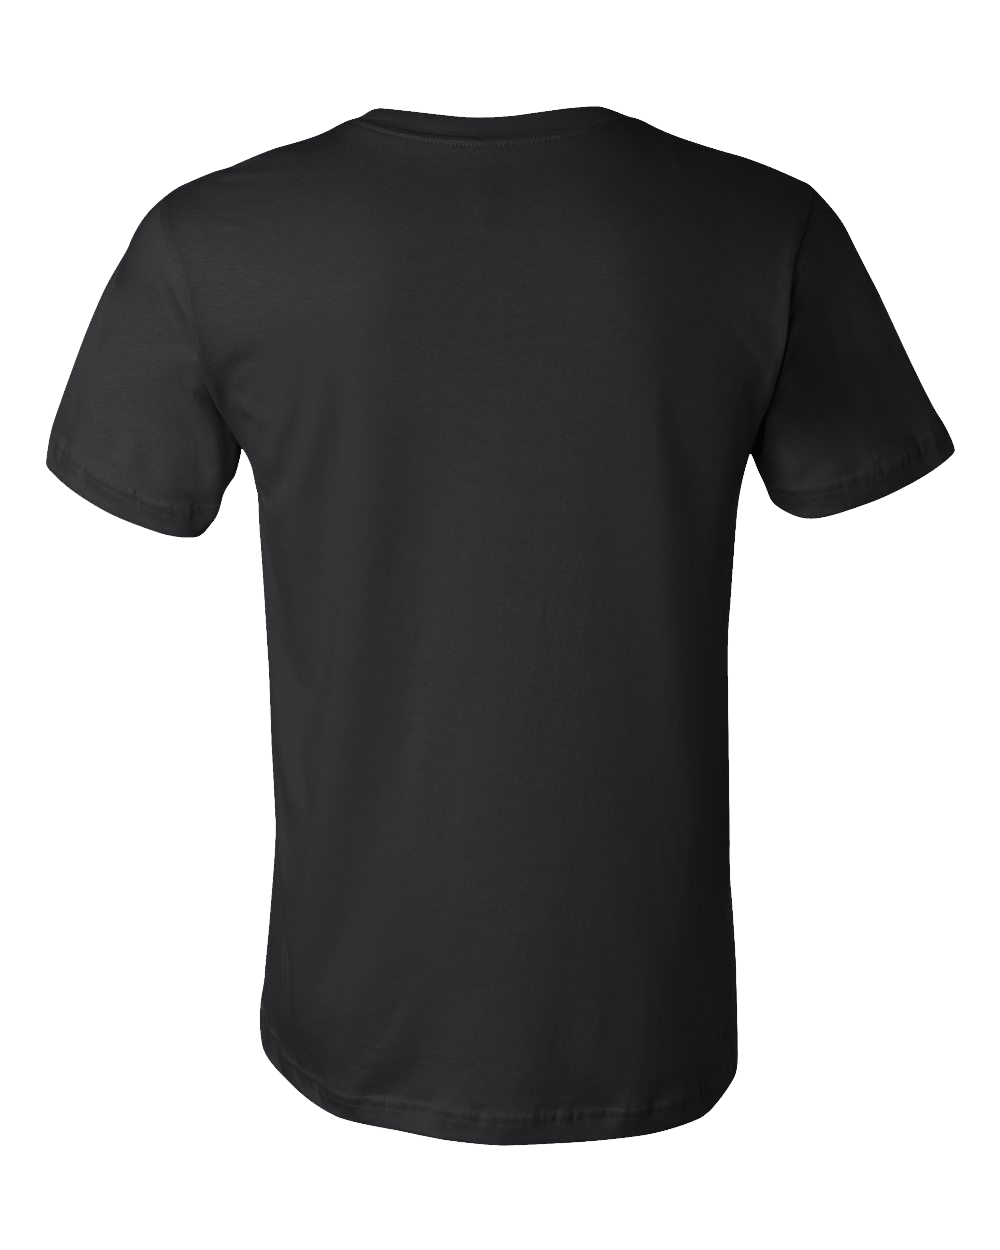 Standard Black Manchester, MO | Retro, Vintage Style Missouri Pride  T-shirt